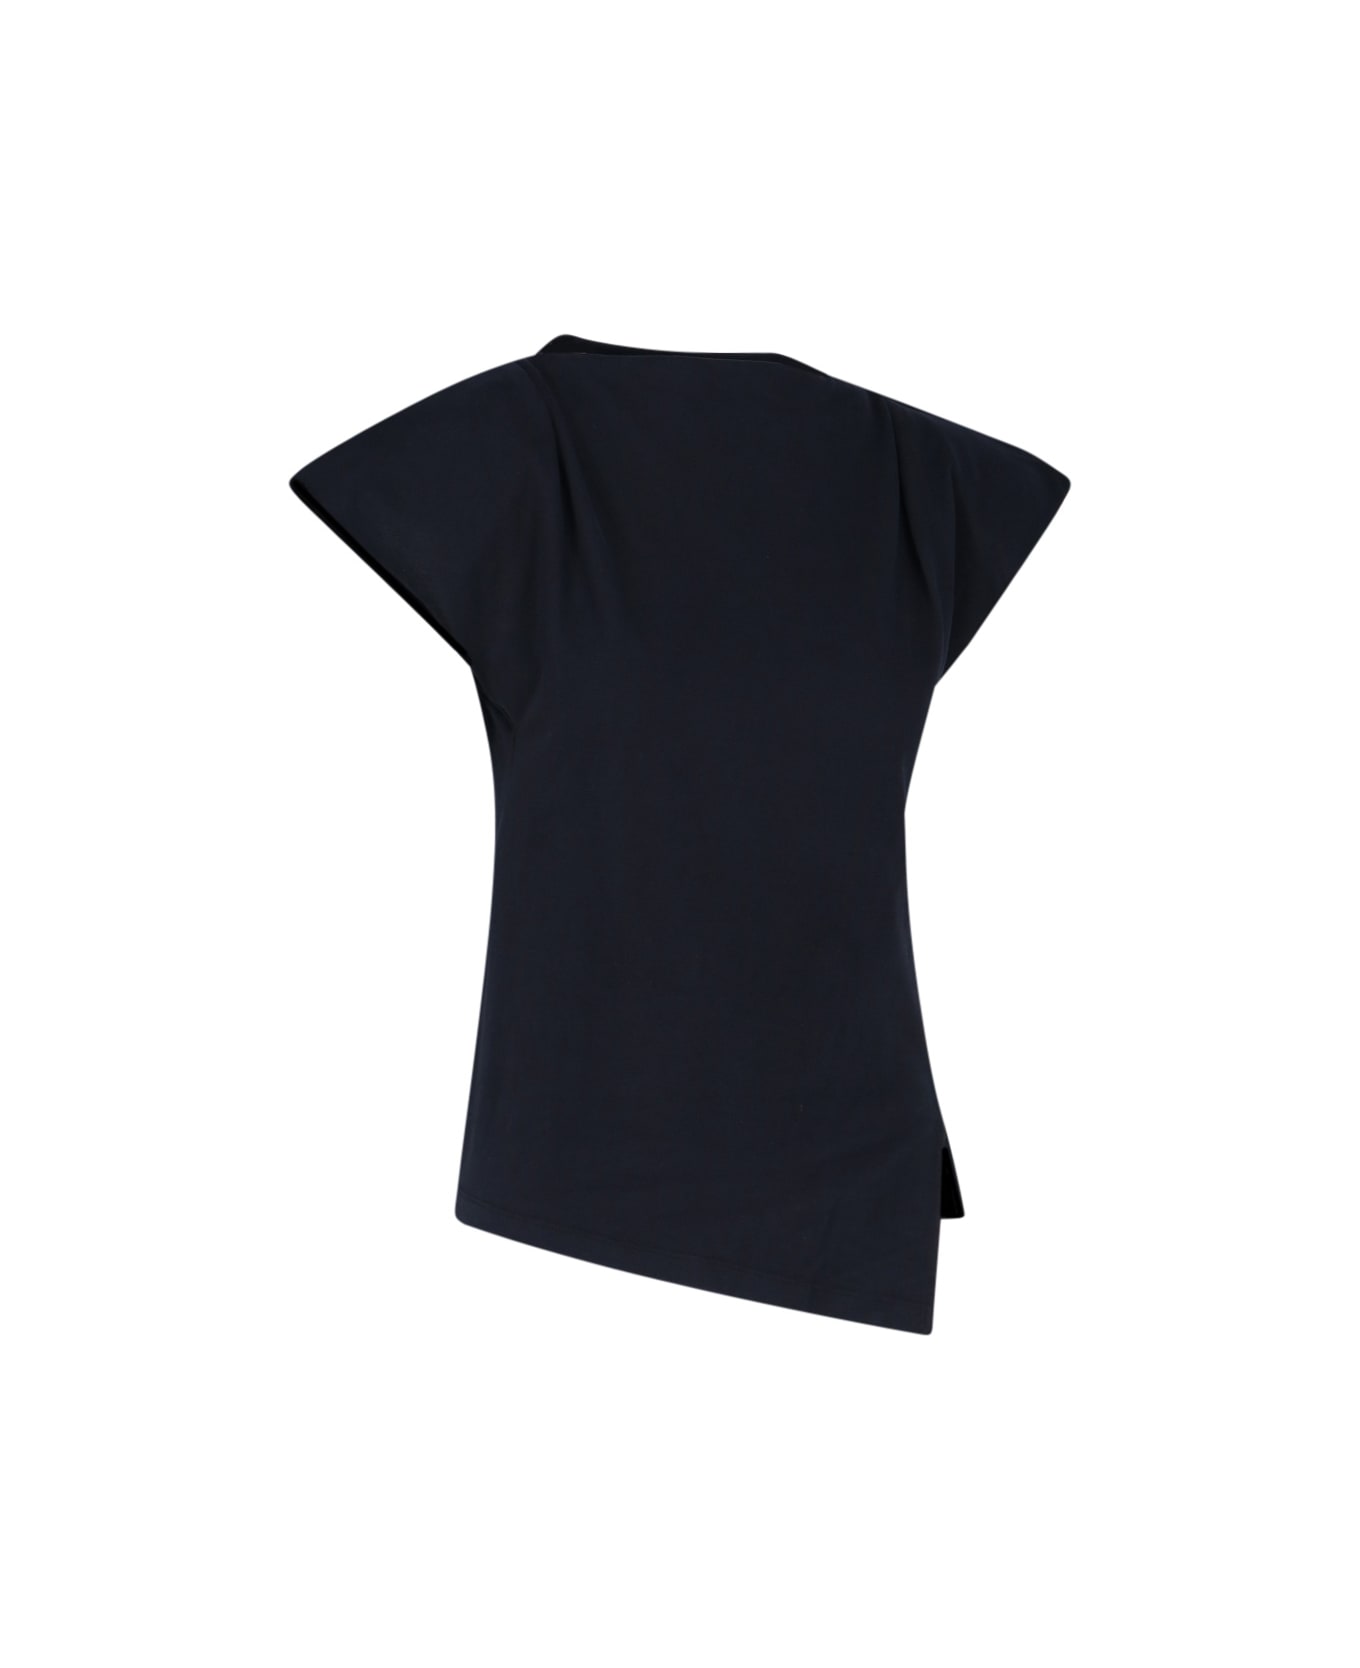 Isabel Marant Sebani T-shirt - Black